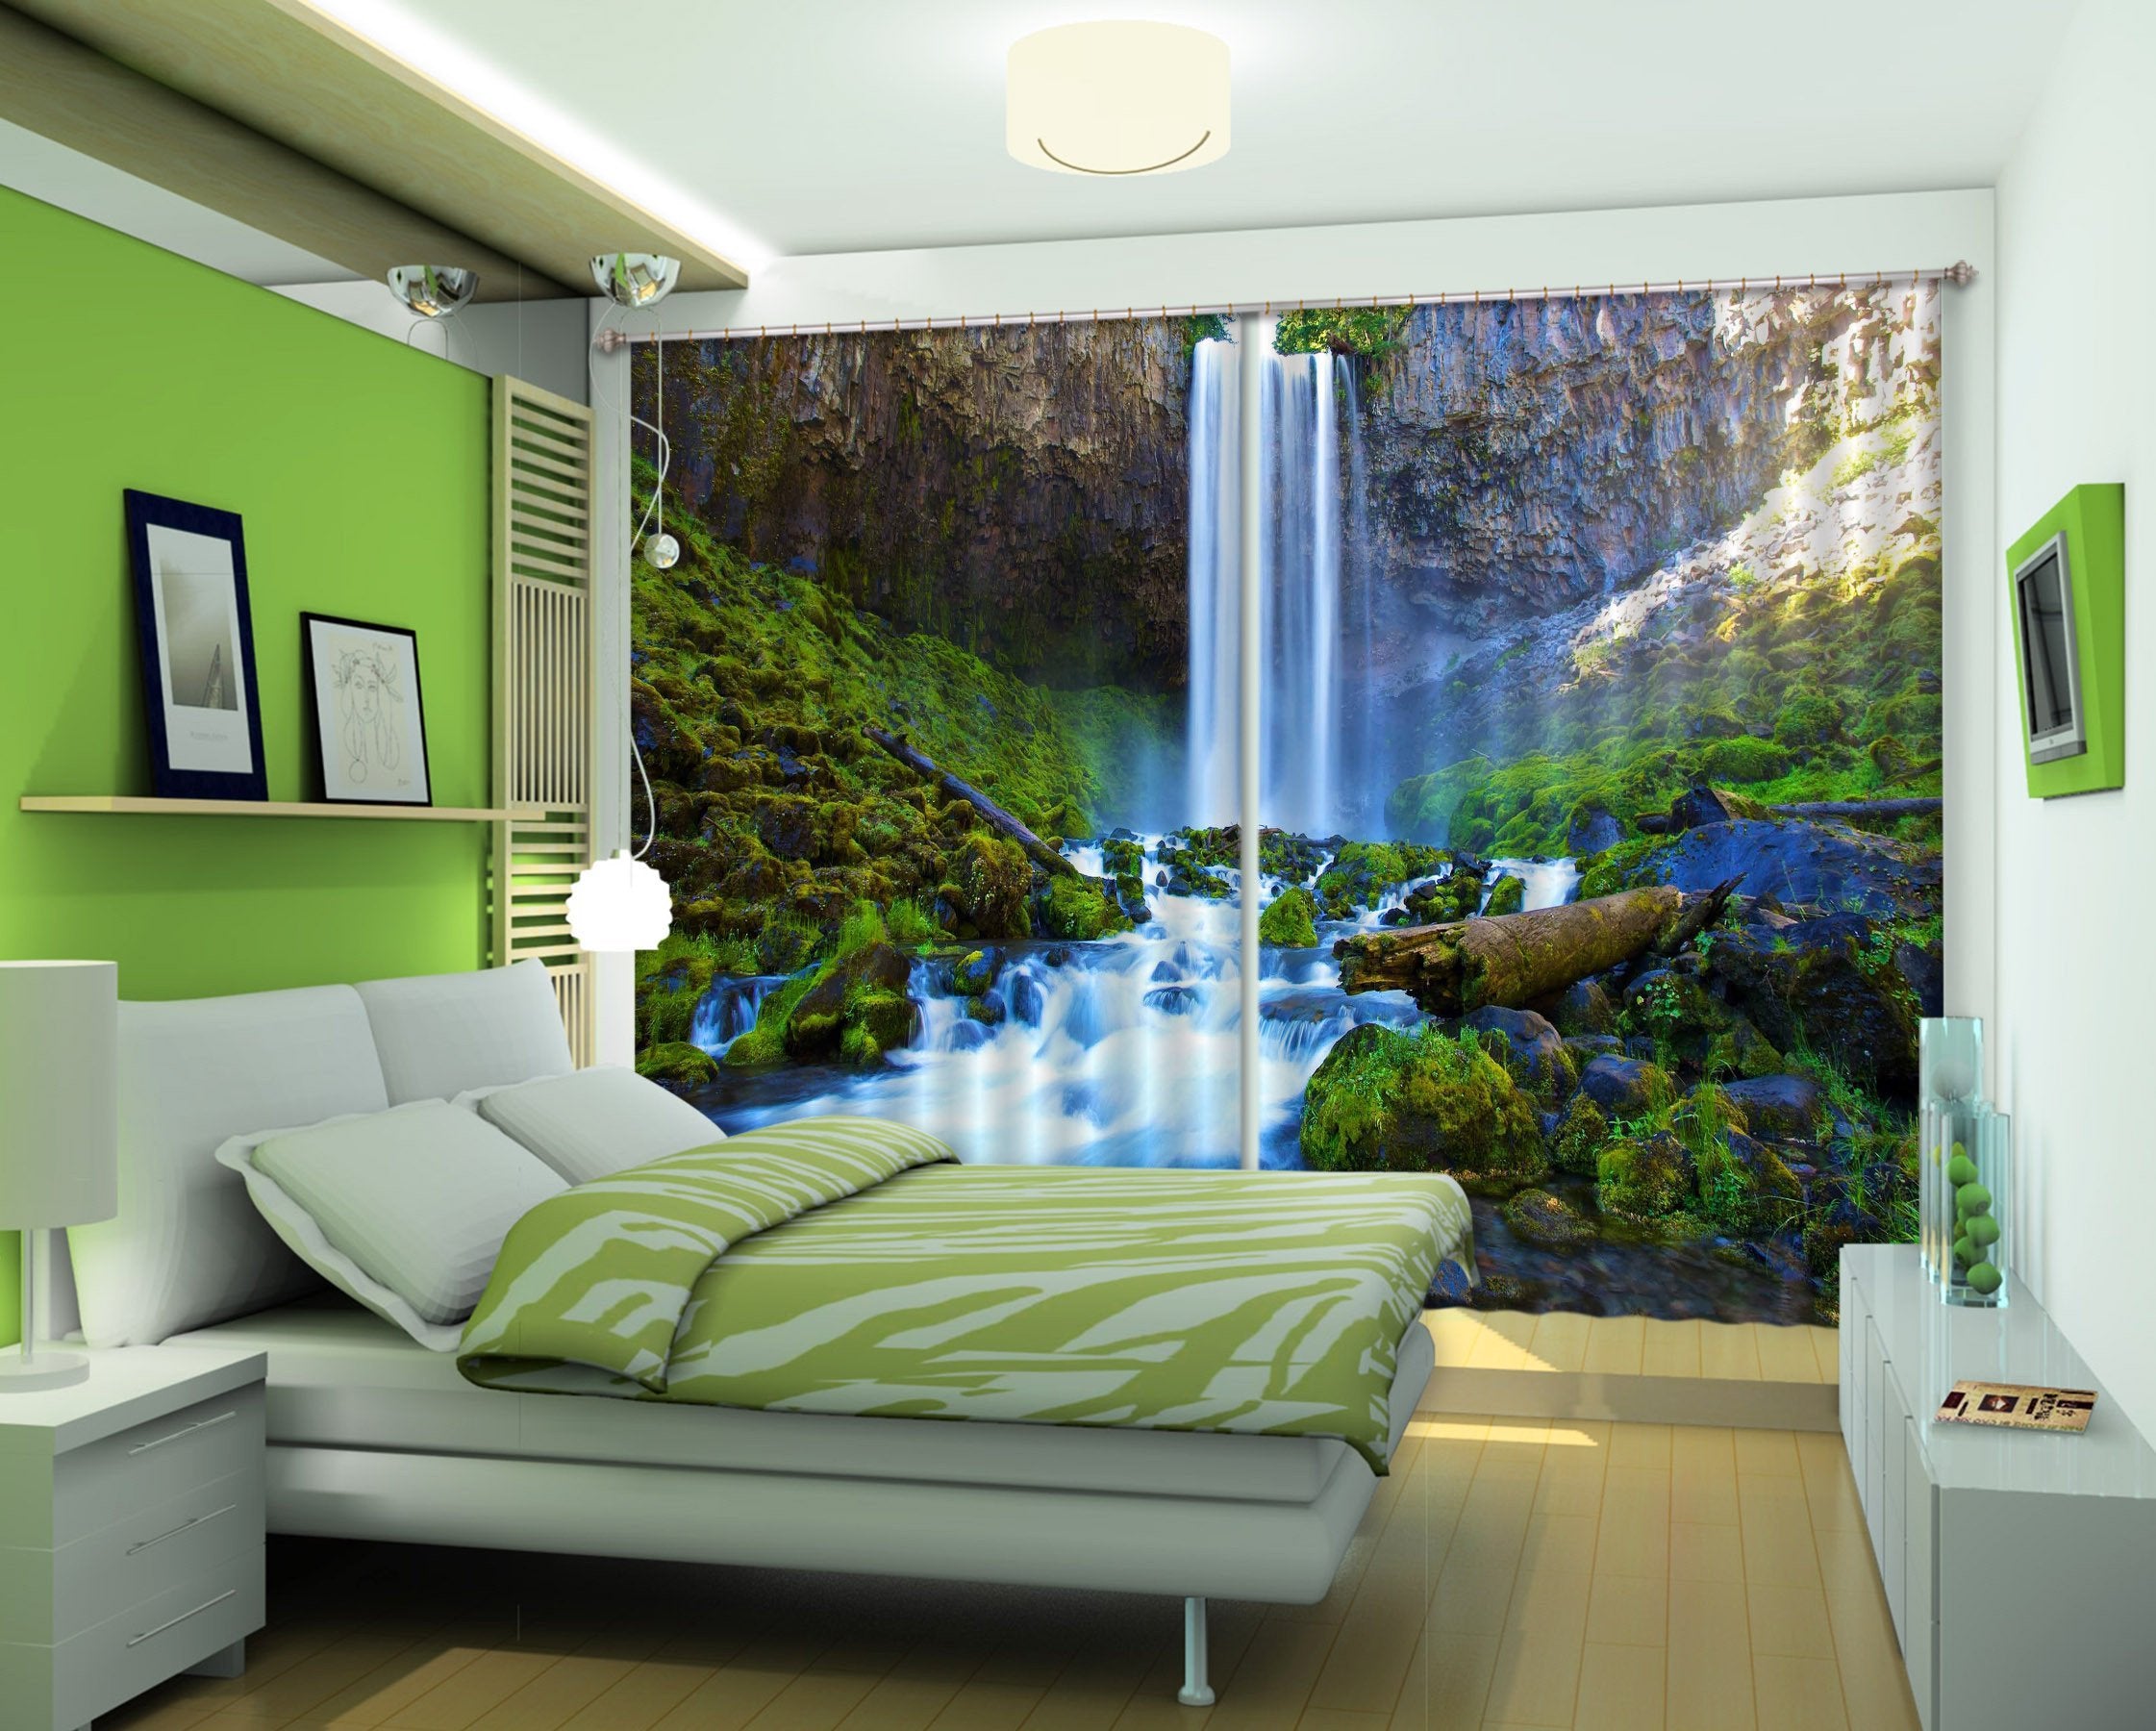 3D Waterfall River Scenery 330 Curtains Drapes Wallpaper AJ Wallpaper 